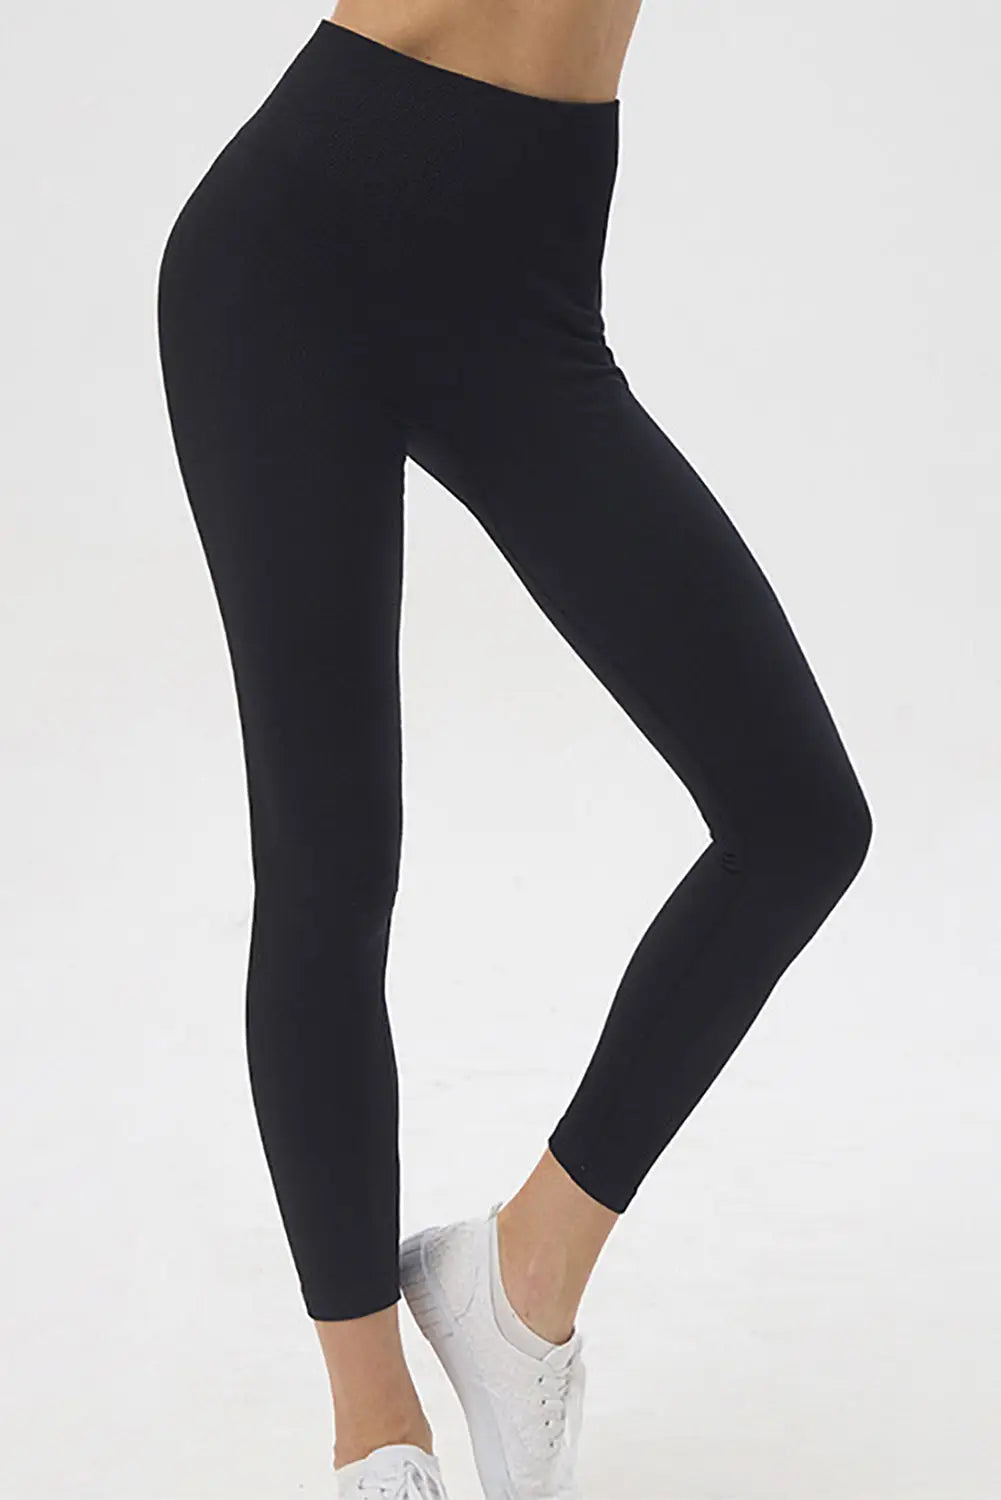 Black Solid Color Seamless Yoga Leggings - Activewear